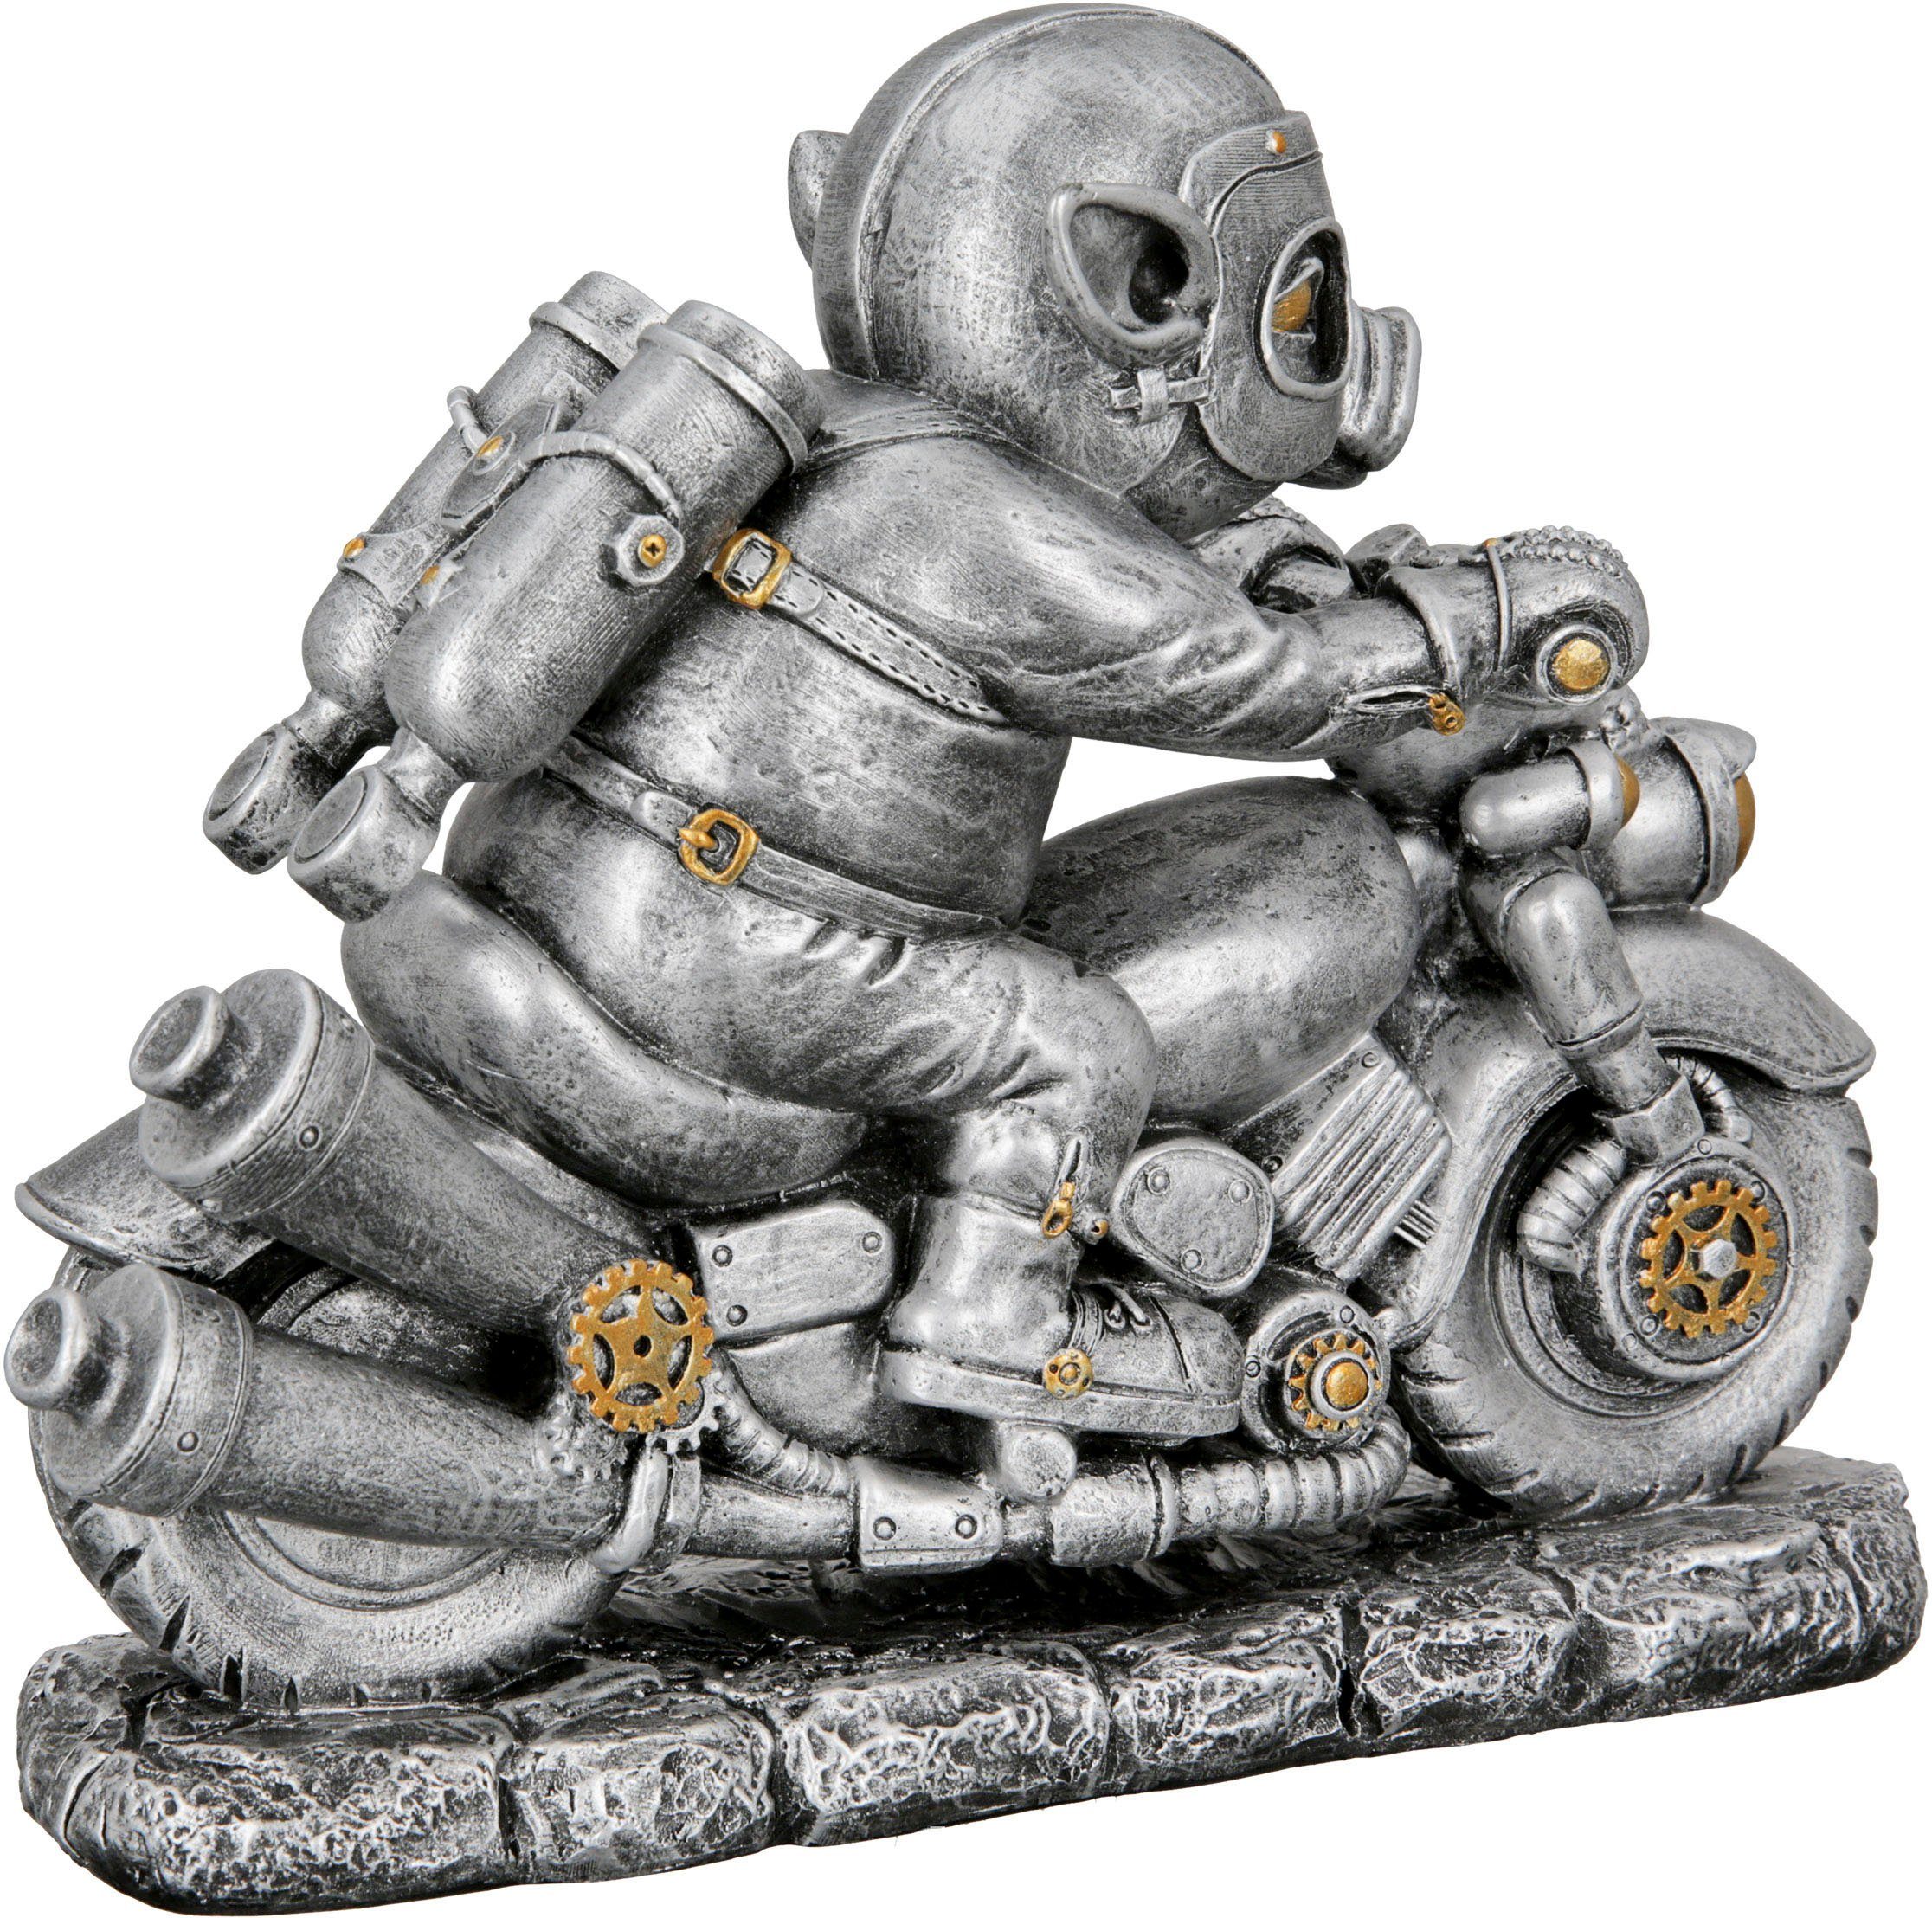 Casablanca Tierfigur (1 Gilde Skulptur Motor-Pig Steampunk St) by